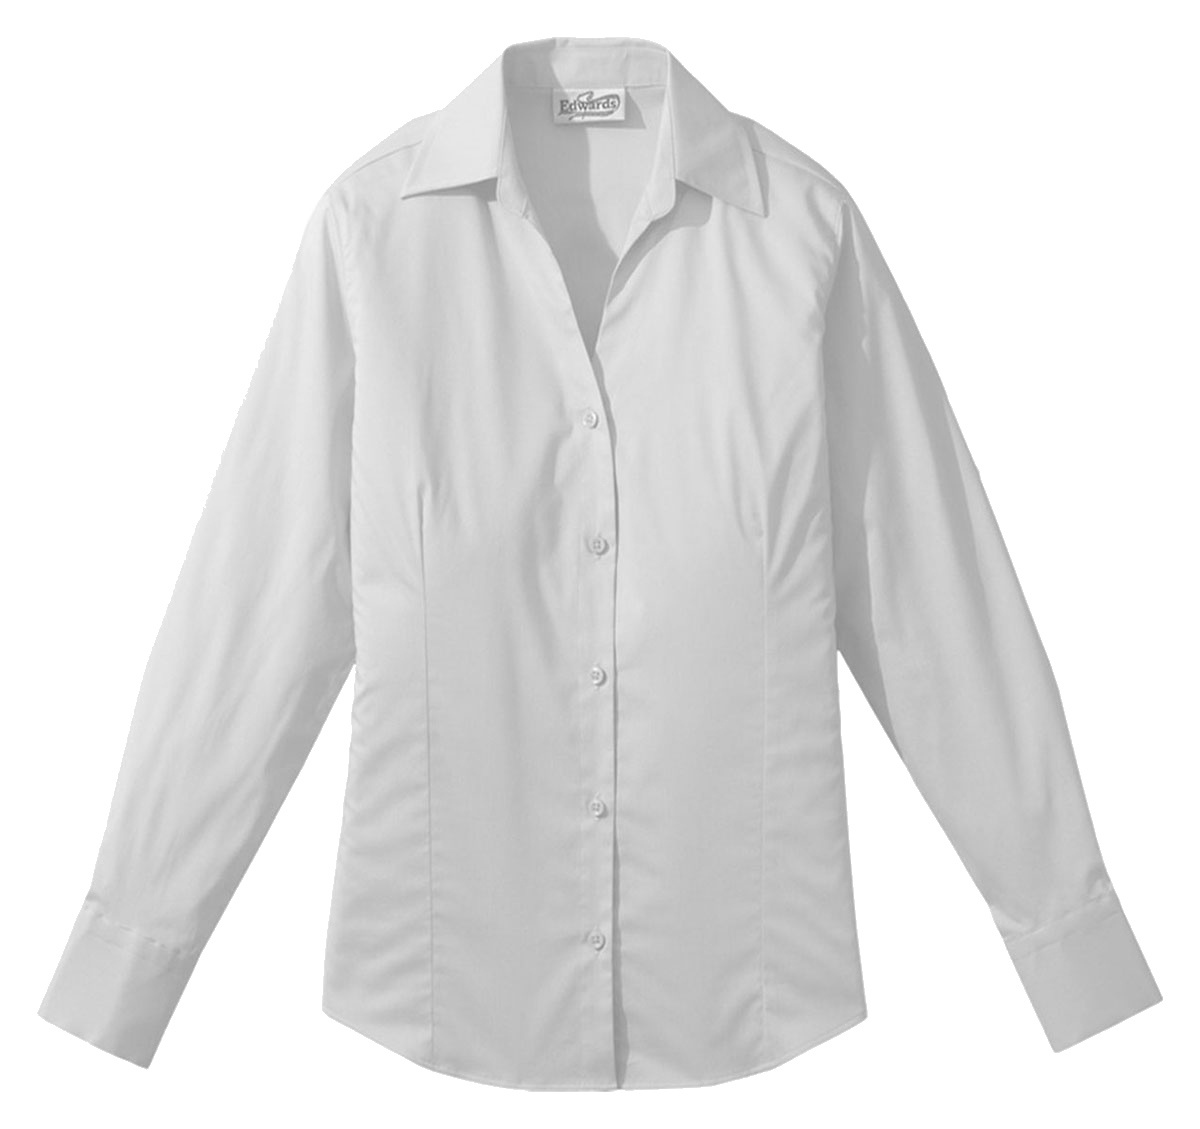 'Edwards 5034 Ladies Tailored V-Neck Stretch Blouse-Long Sleeve'